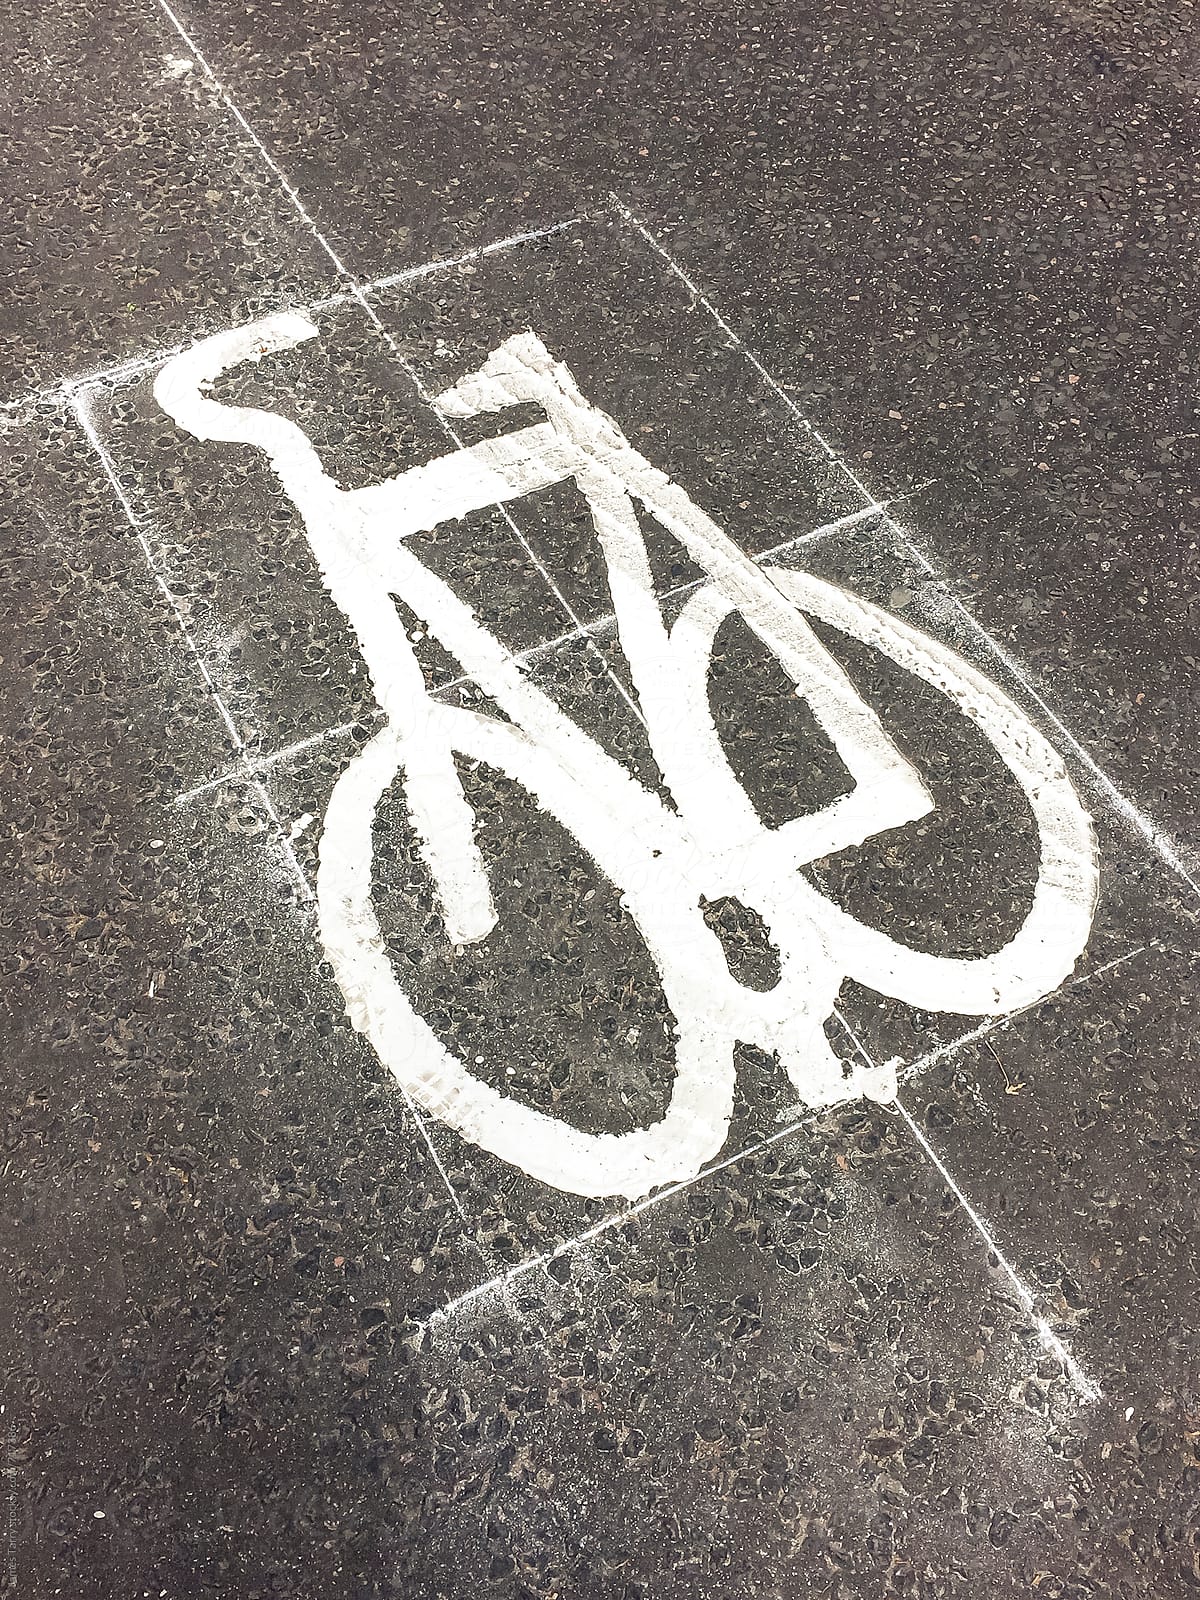 Bike Stencil